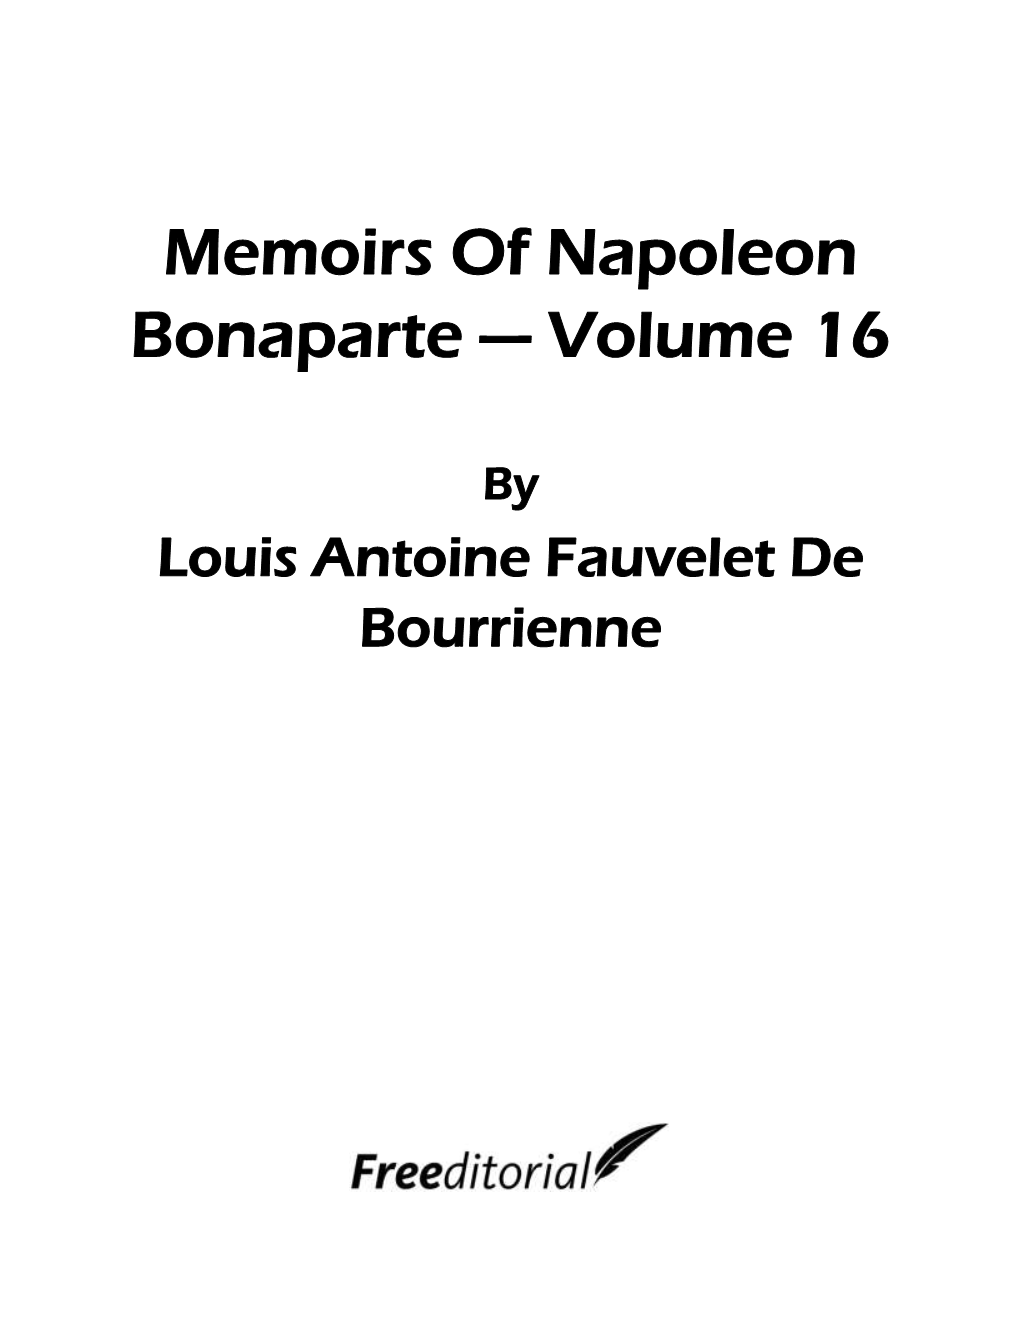 Memoirs of Napoleon Bonaparte — Volume 16